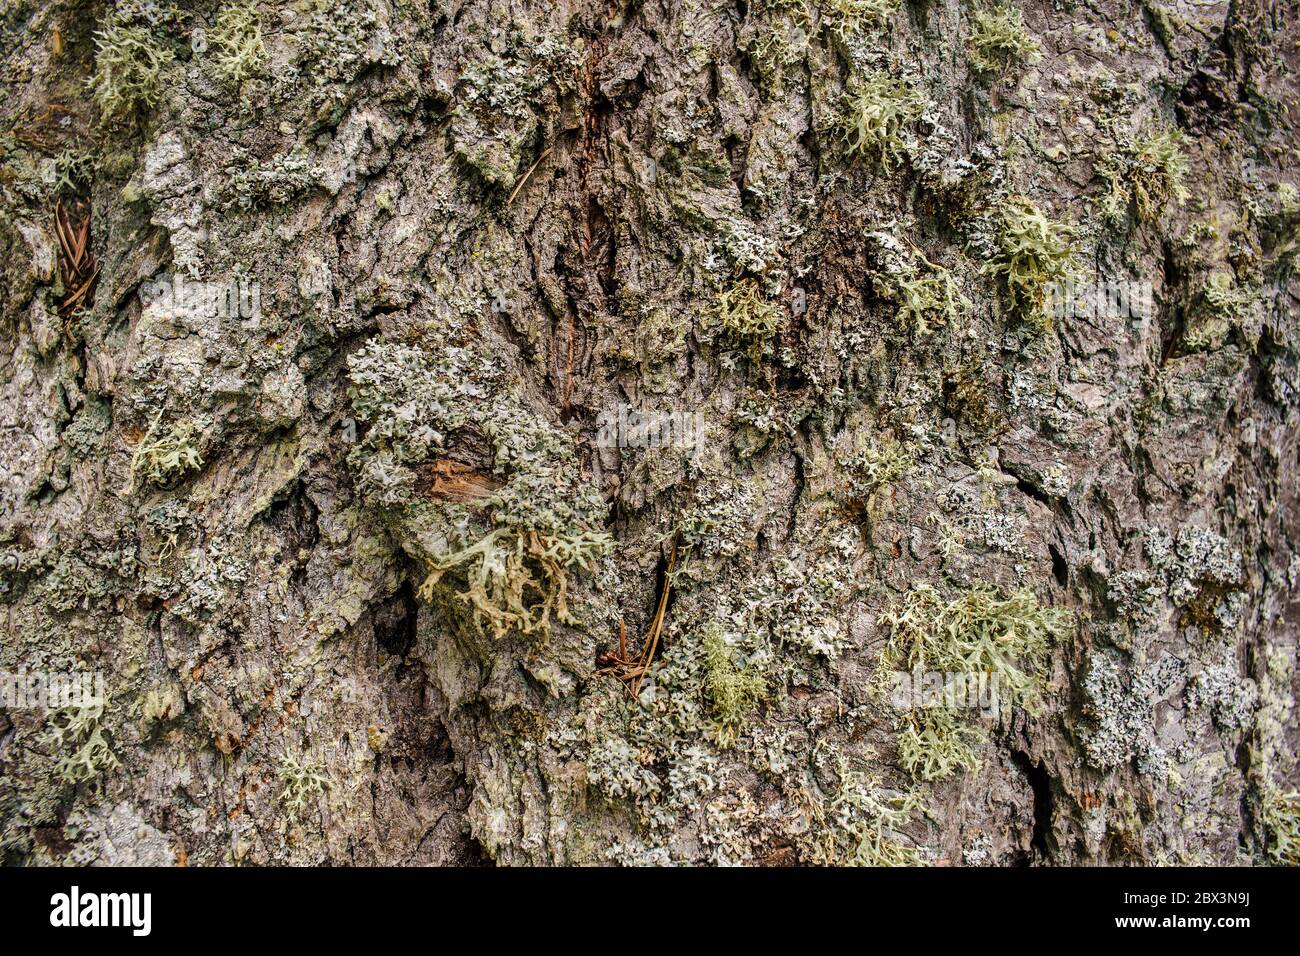 Detail of various lichen species growing on bark of Douglas Fir, Pseudotsuga menziesii, tree Stock Photo